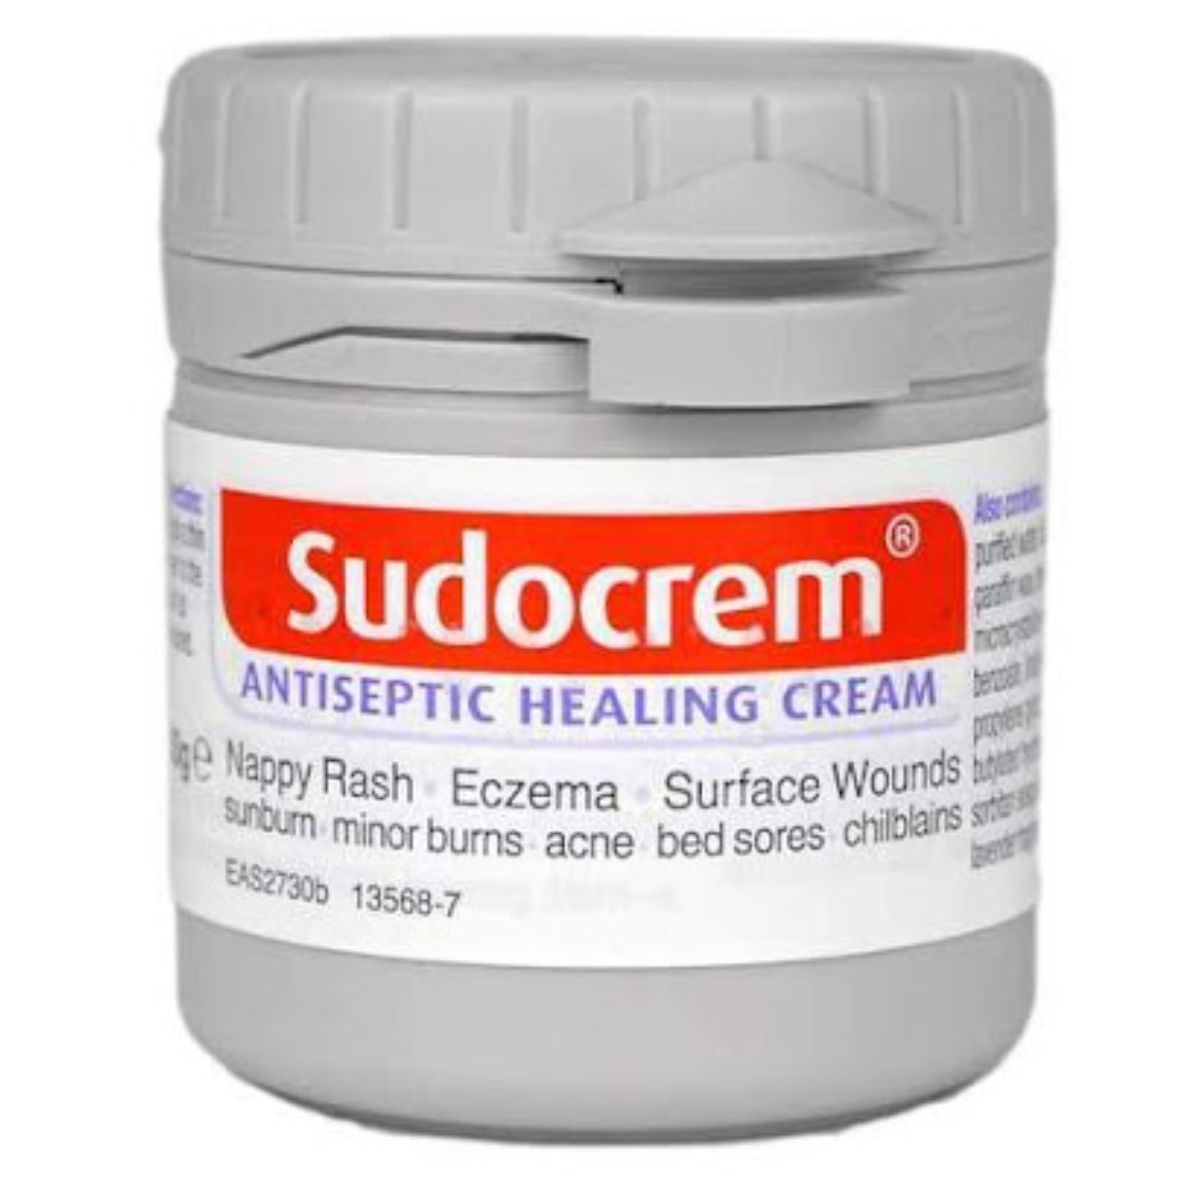 Sudocrem - Antiseptic Healing Cream - 60g.